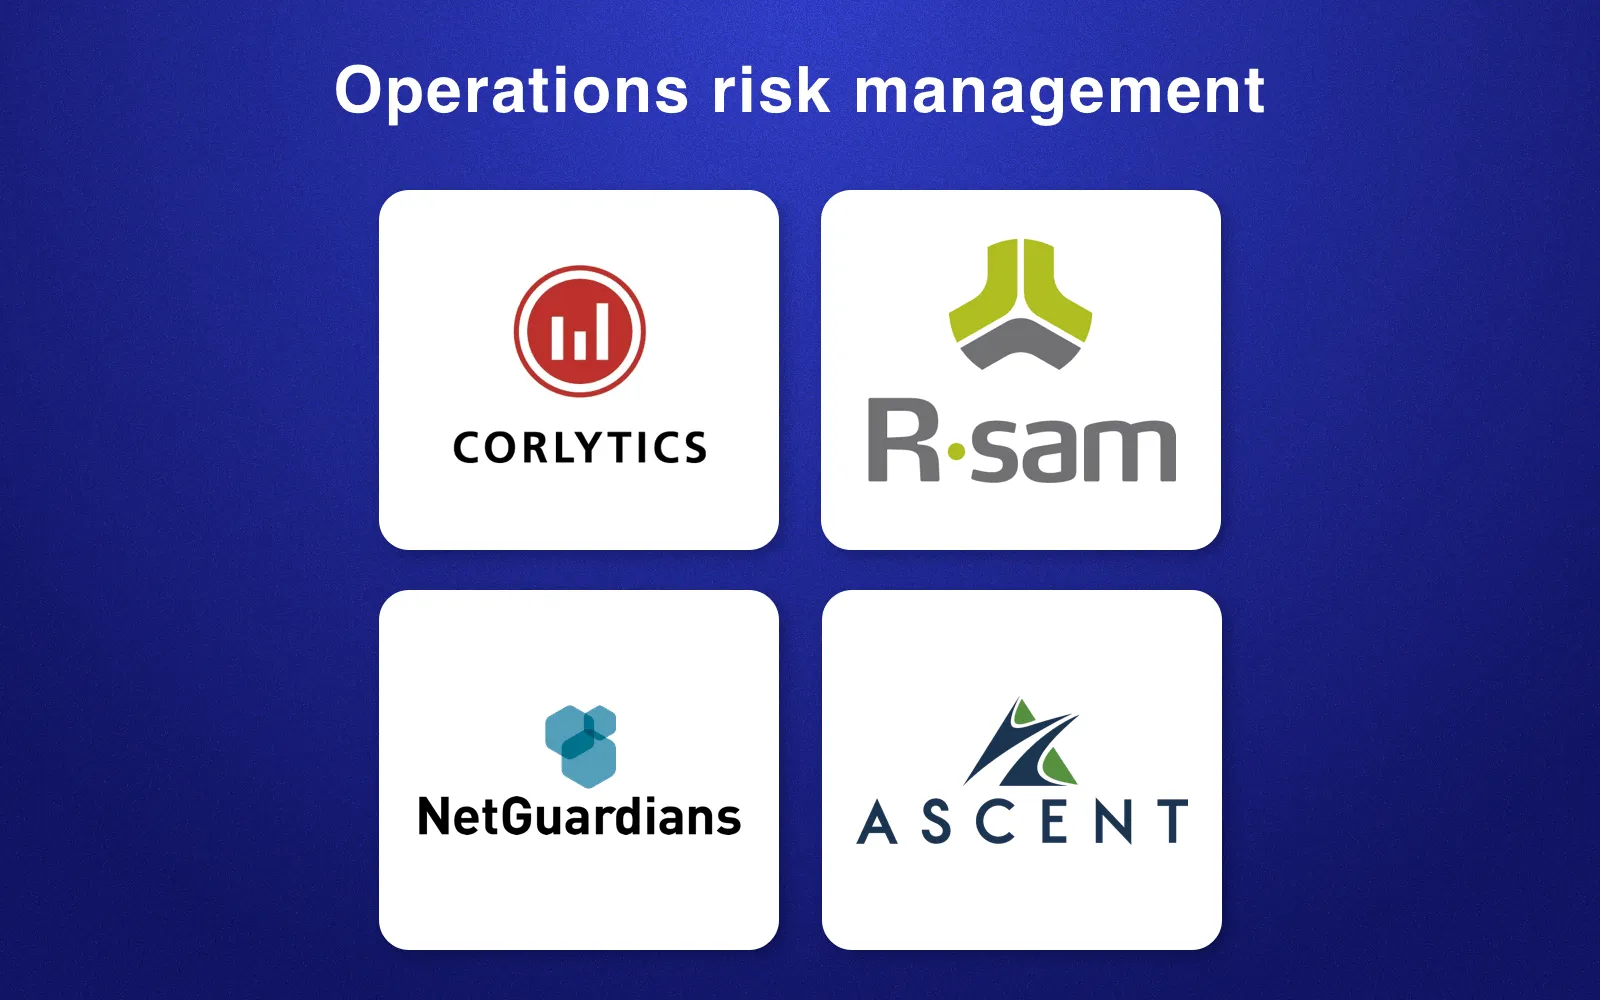 RegTech companies in operations risk management field